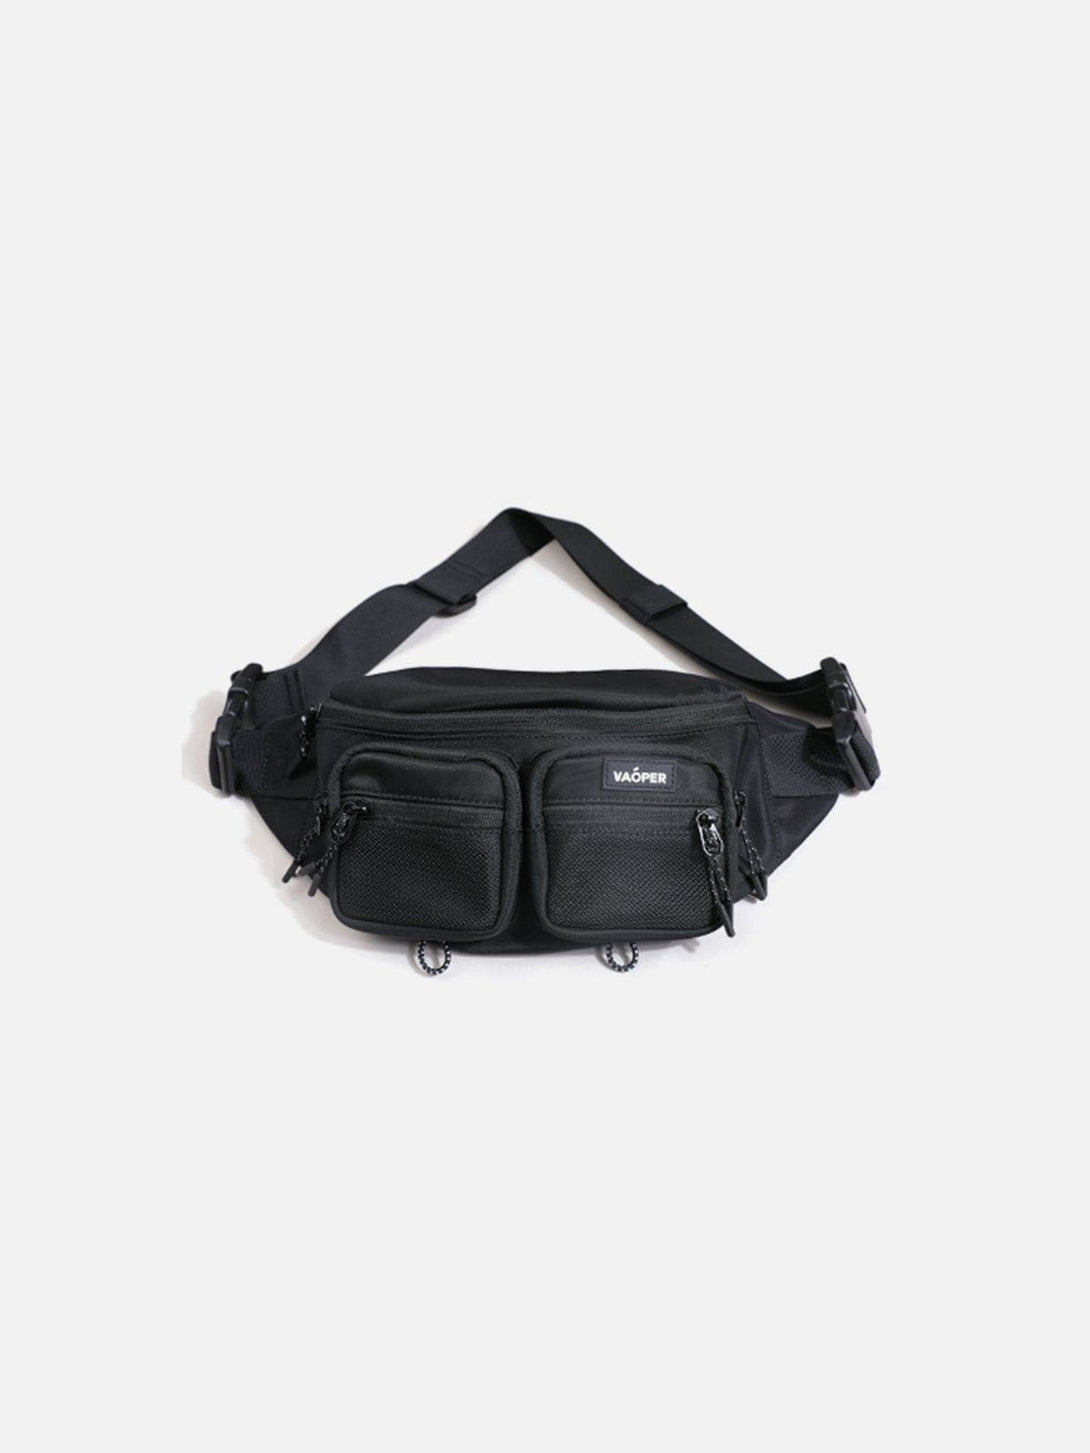 Majesda® - Functional Pocket Crossbody Bag- Outfit Ideas - Streetwear Fashion - majesda.com